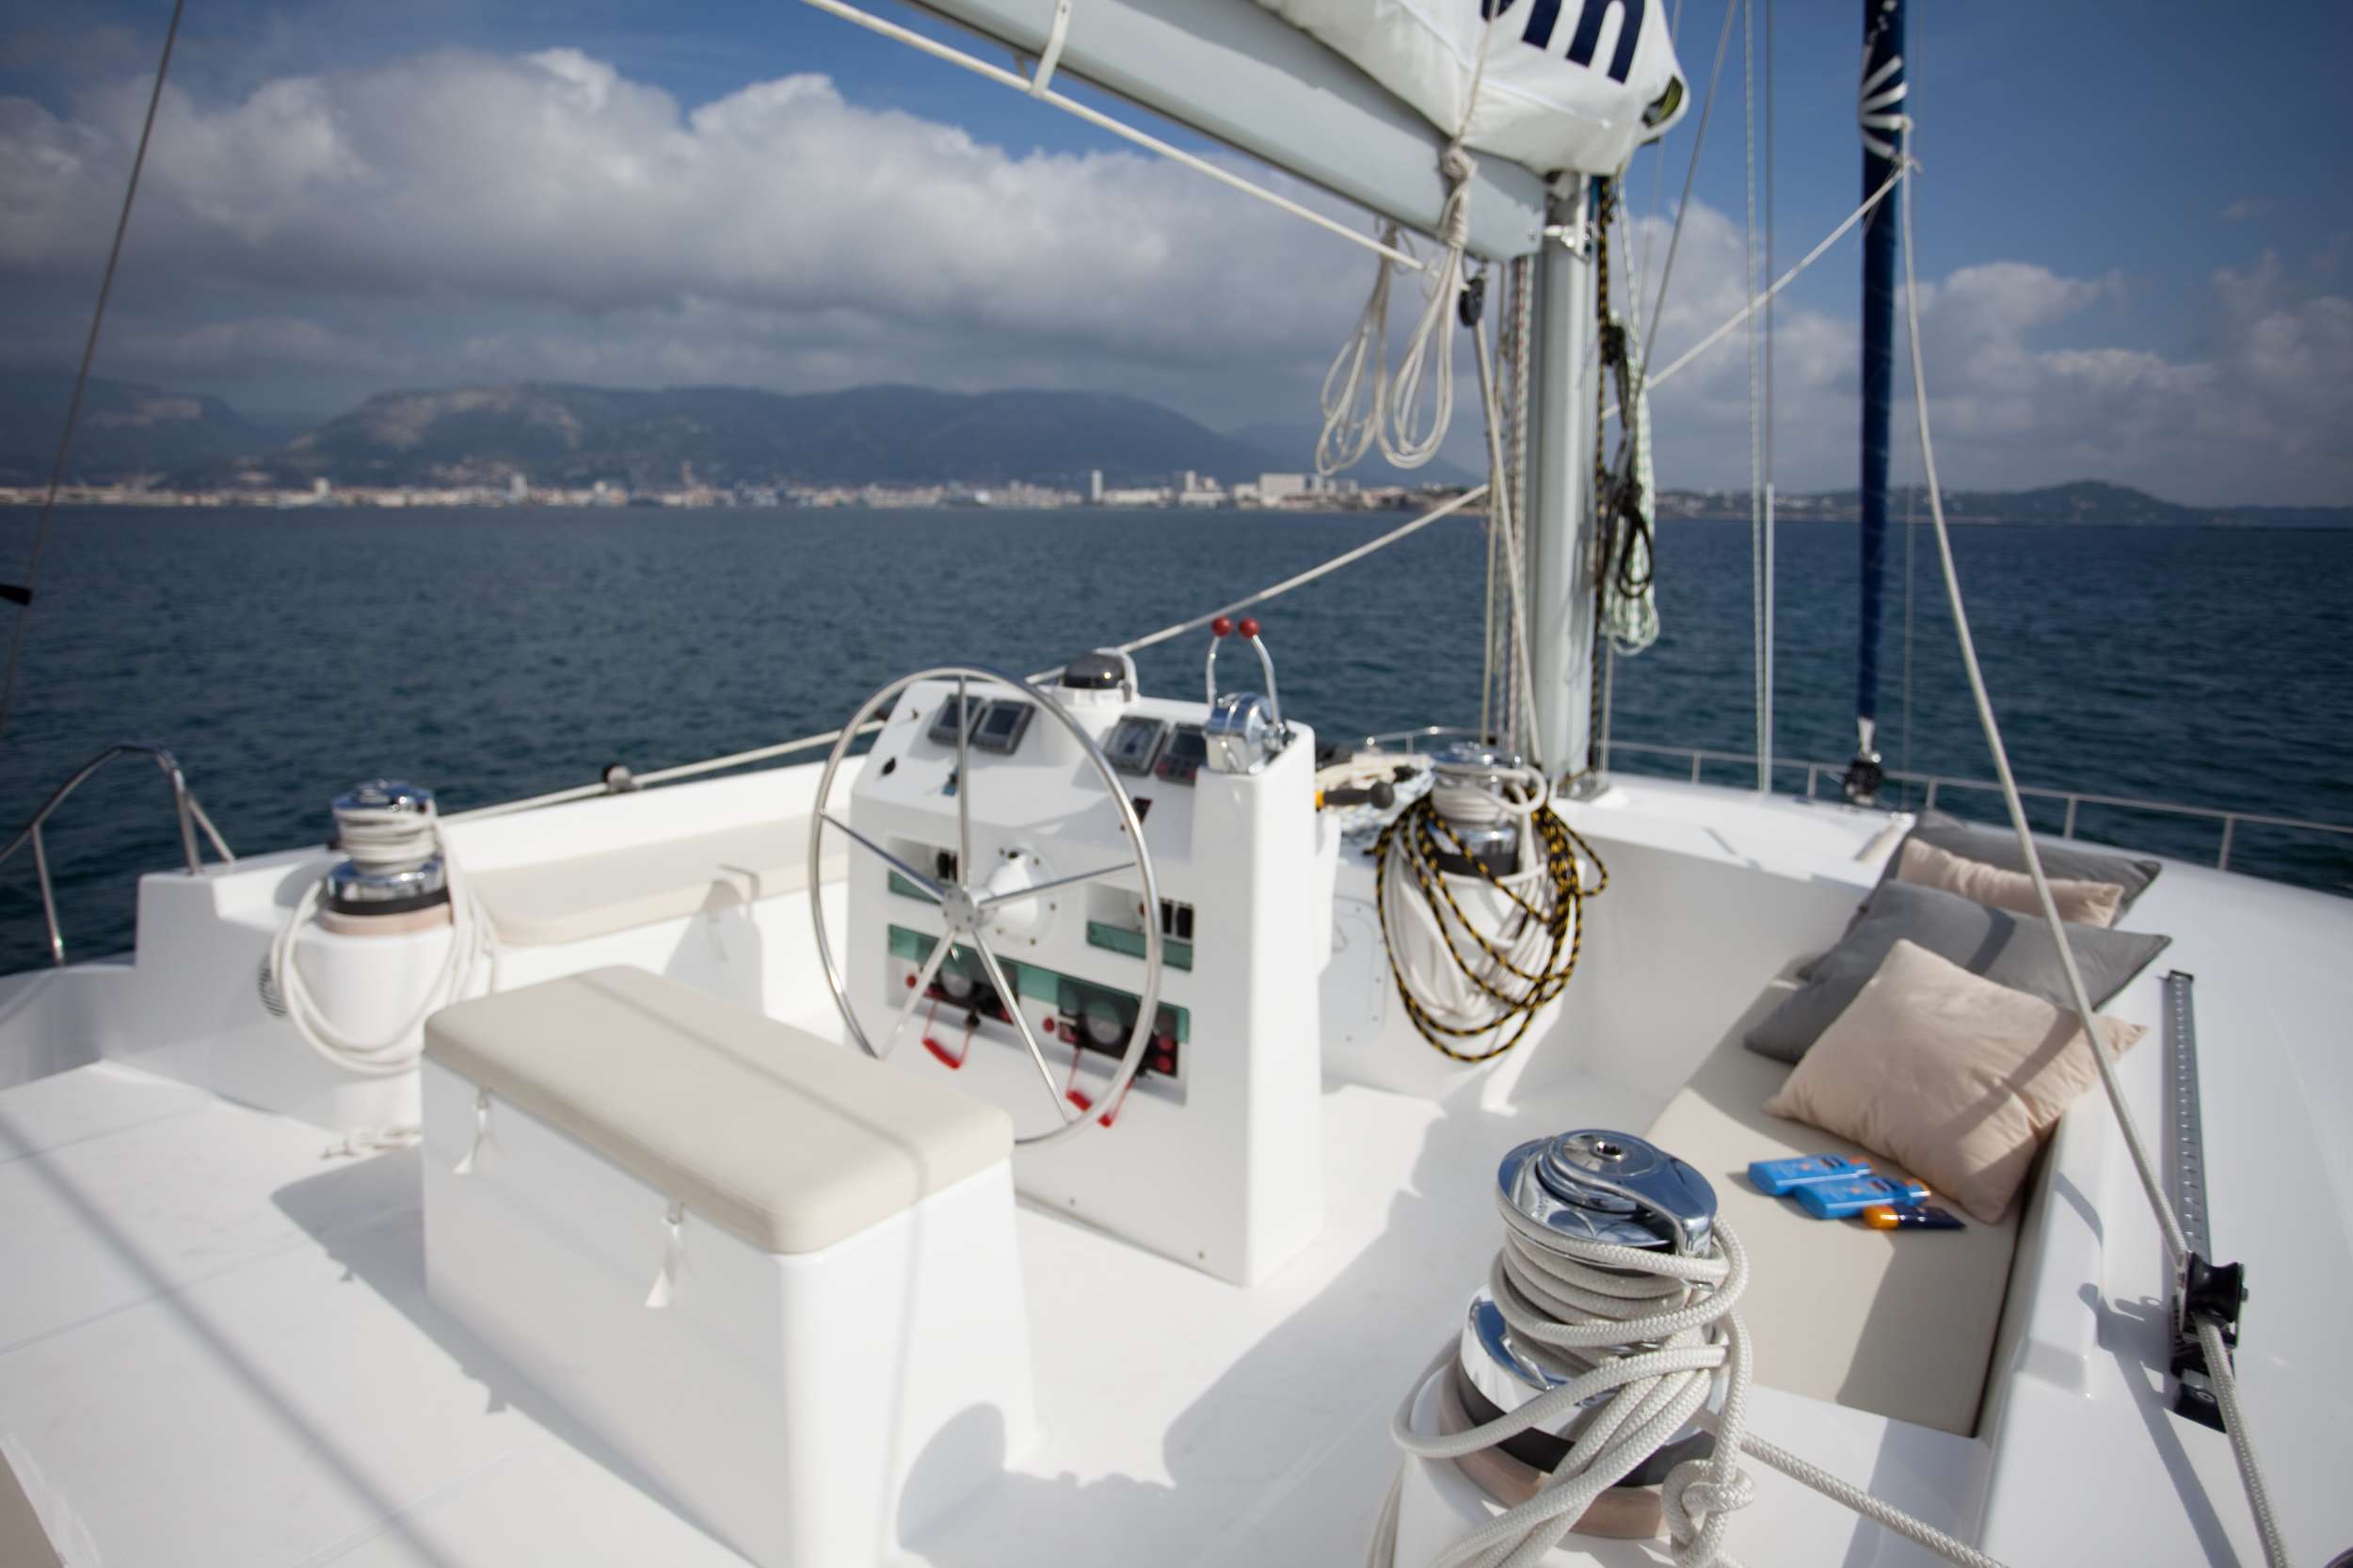 Dream 60 - Littr&eacute; &amp; Tauceti - Sailboat Charter Seychelles & Boat hire in W. Med -Naples/Sicily, W. Med - Spain/Balearics, Croatia Bahamas, Indian Ocean and SE Asia 4